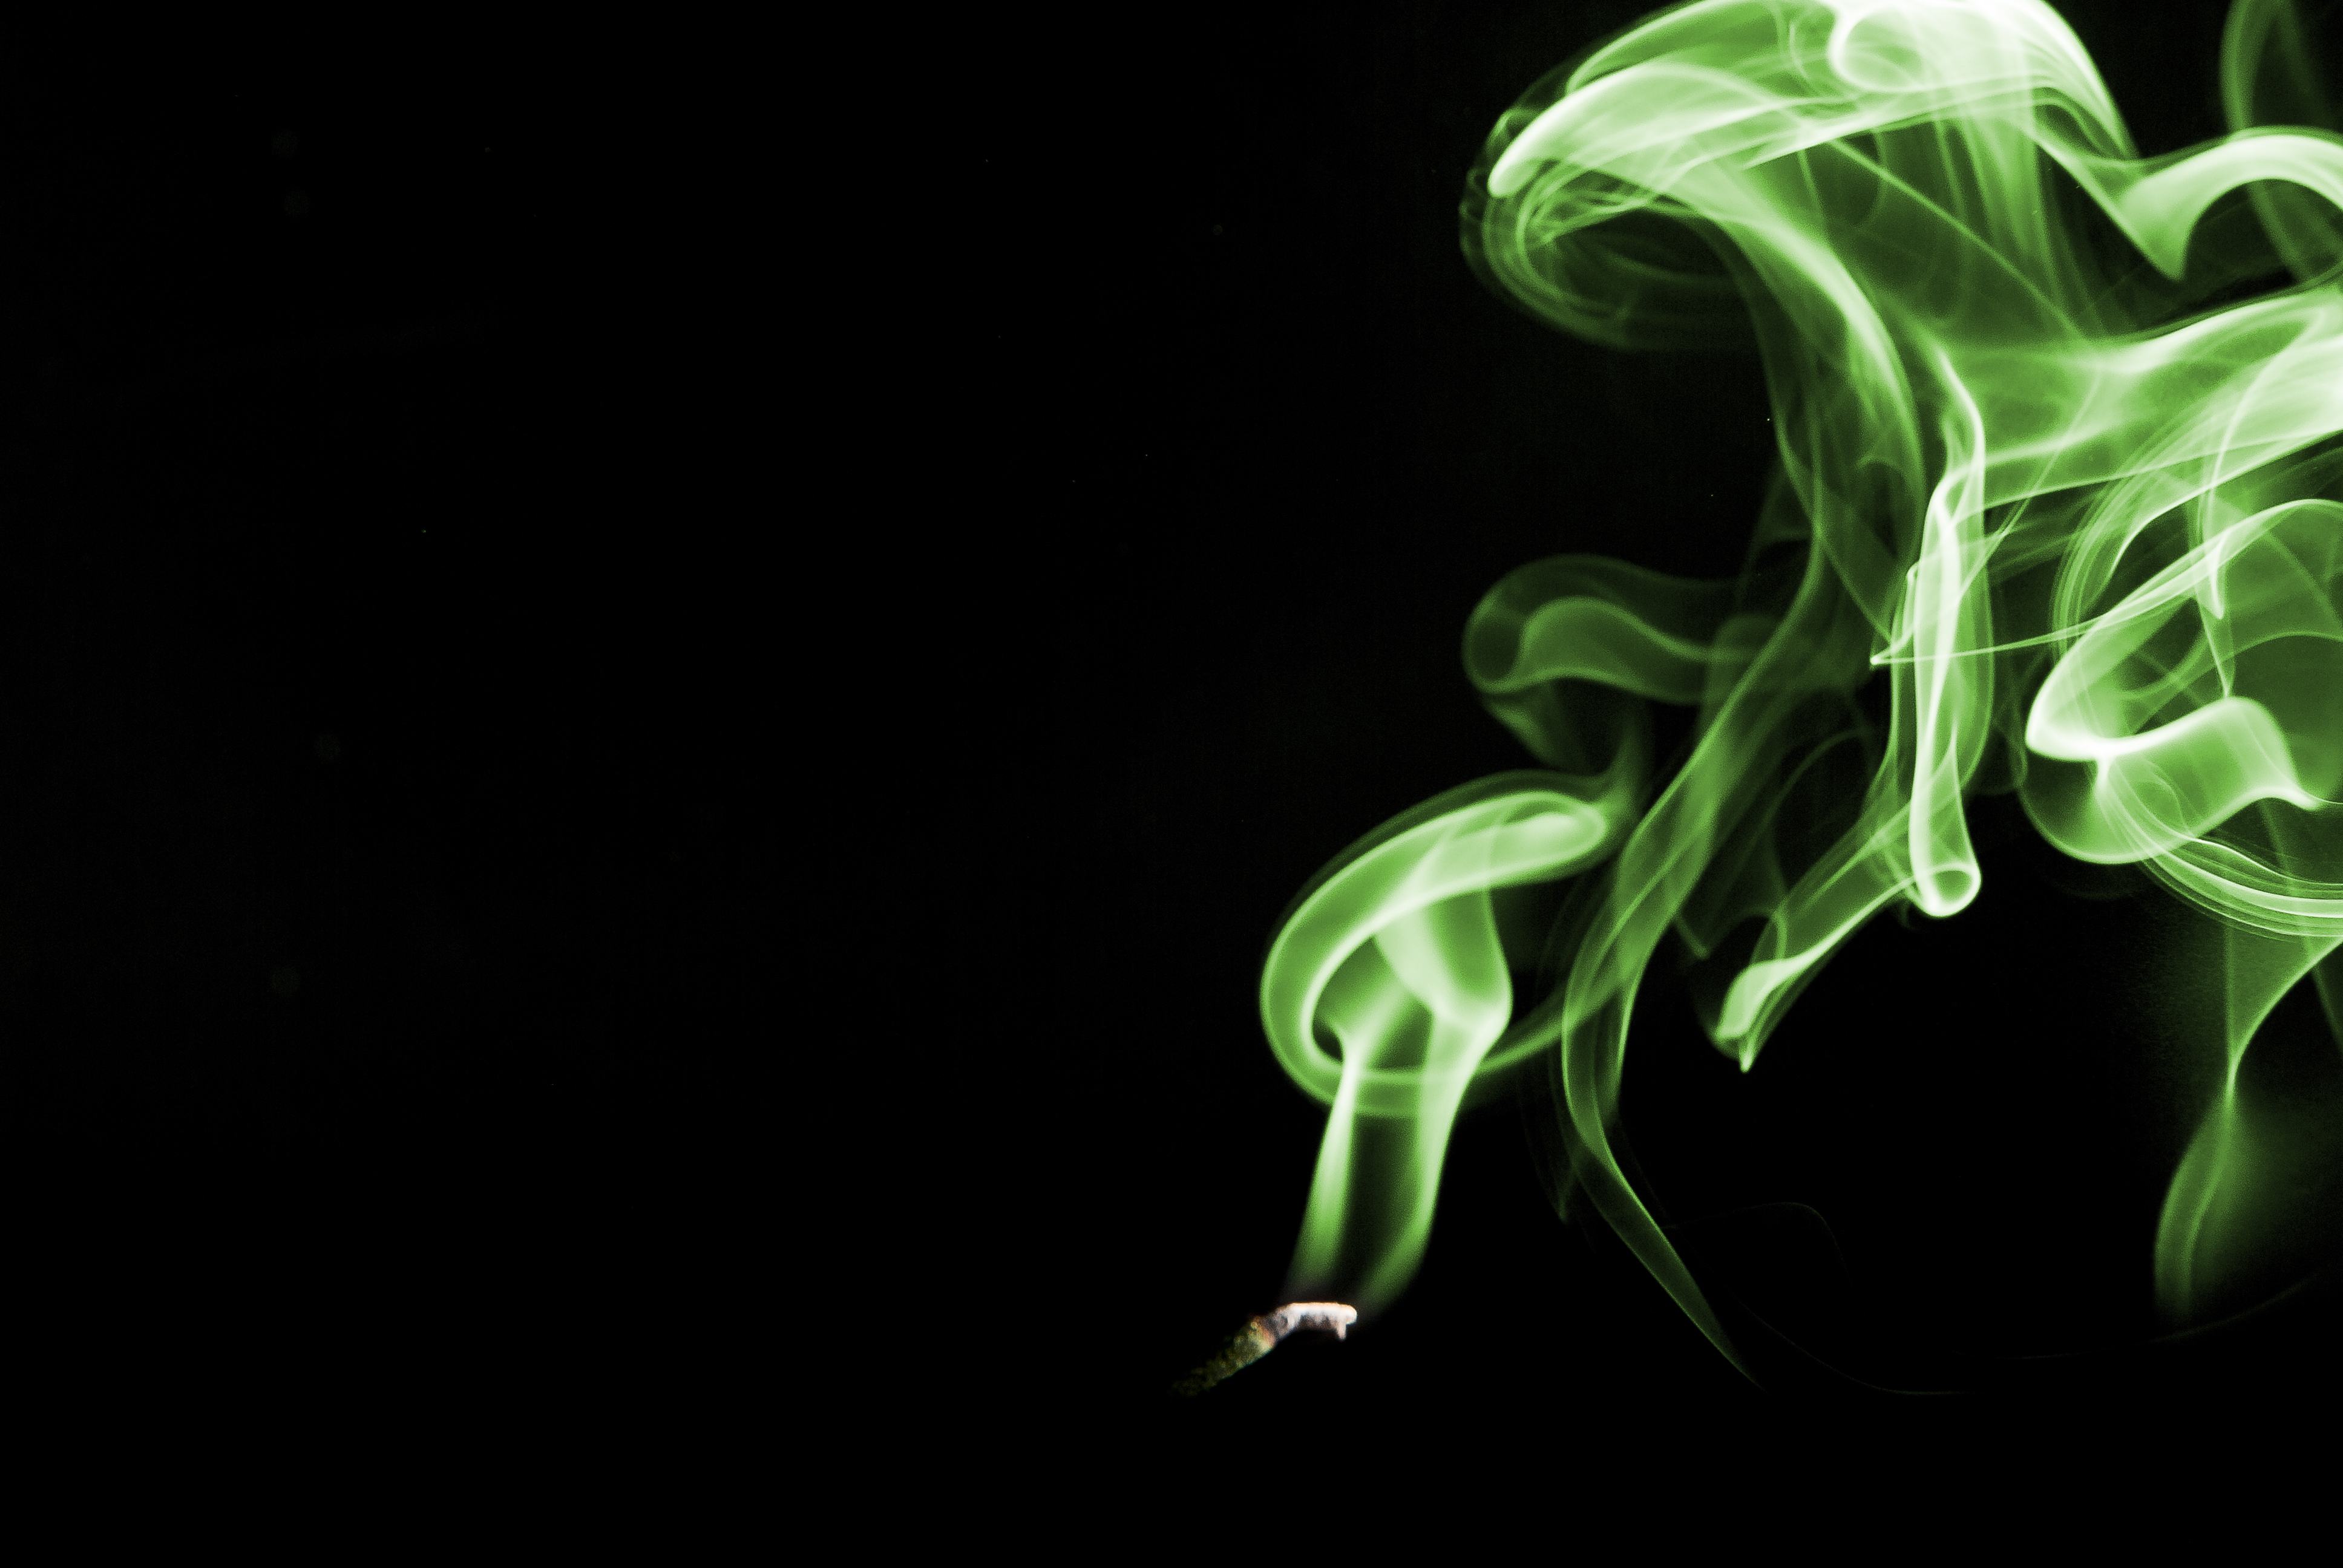 Green Smoke by BrandonLee88 on DeviantArt